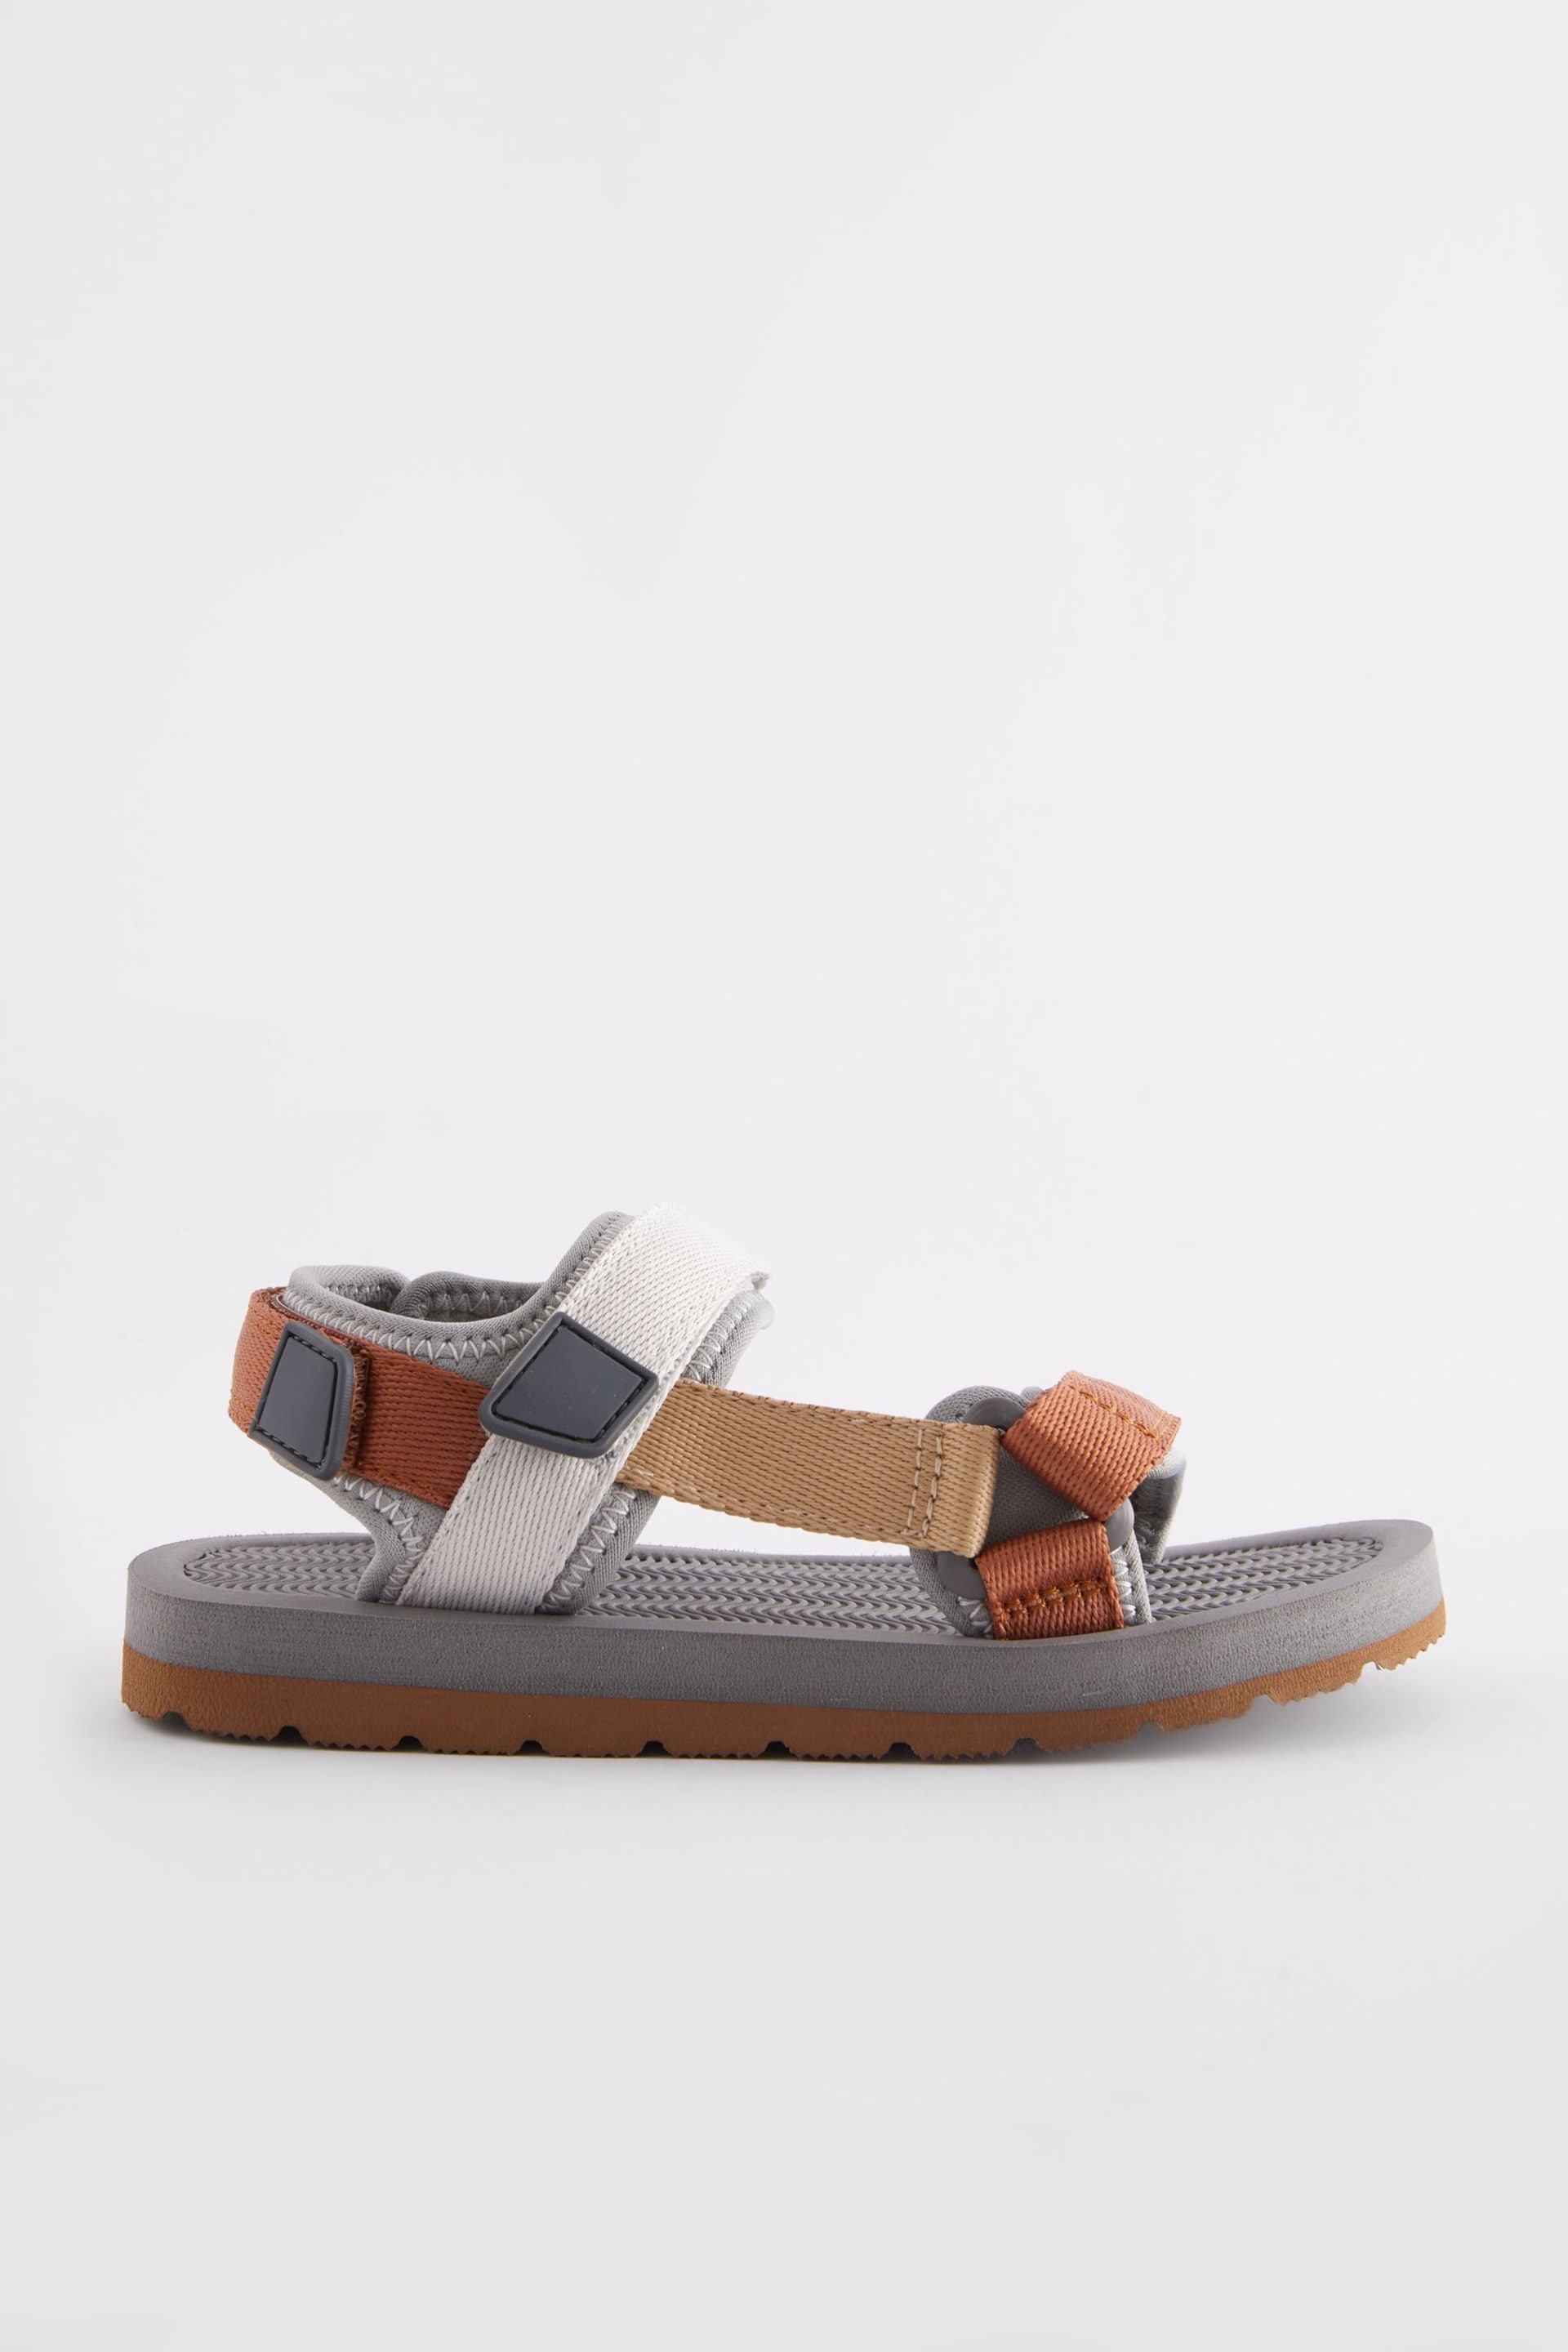 Tan/Grey Trekker Sandals - Image 2 of 5